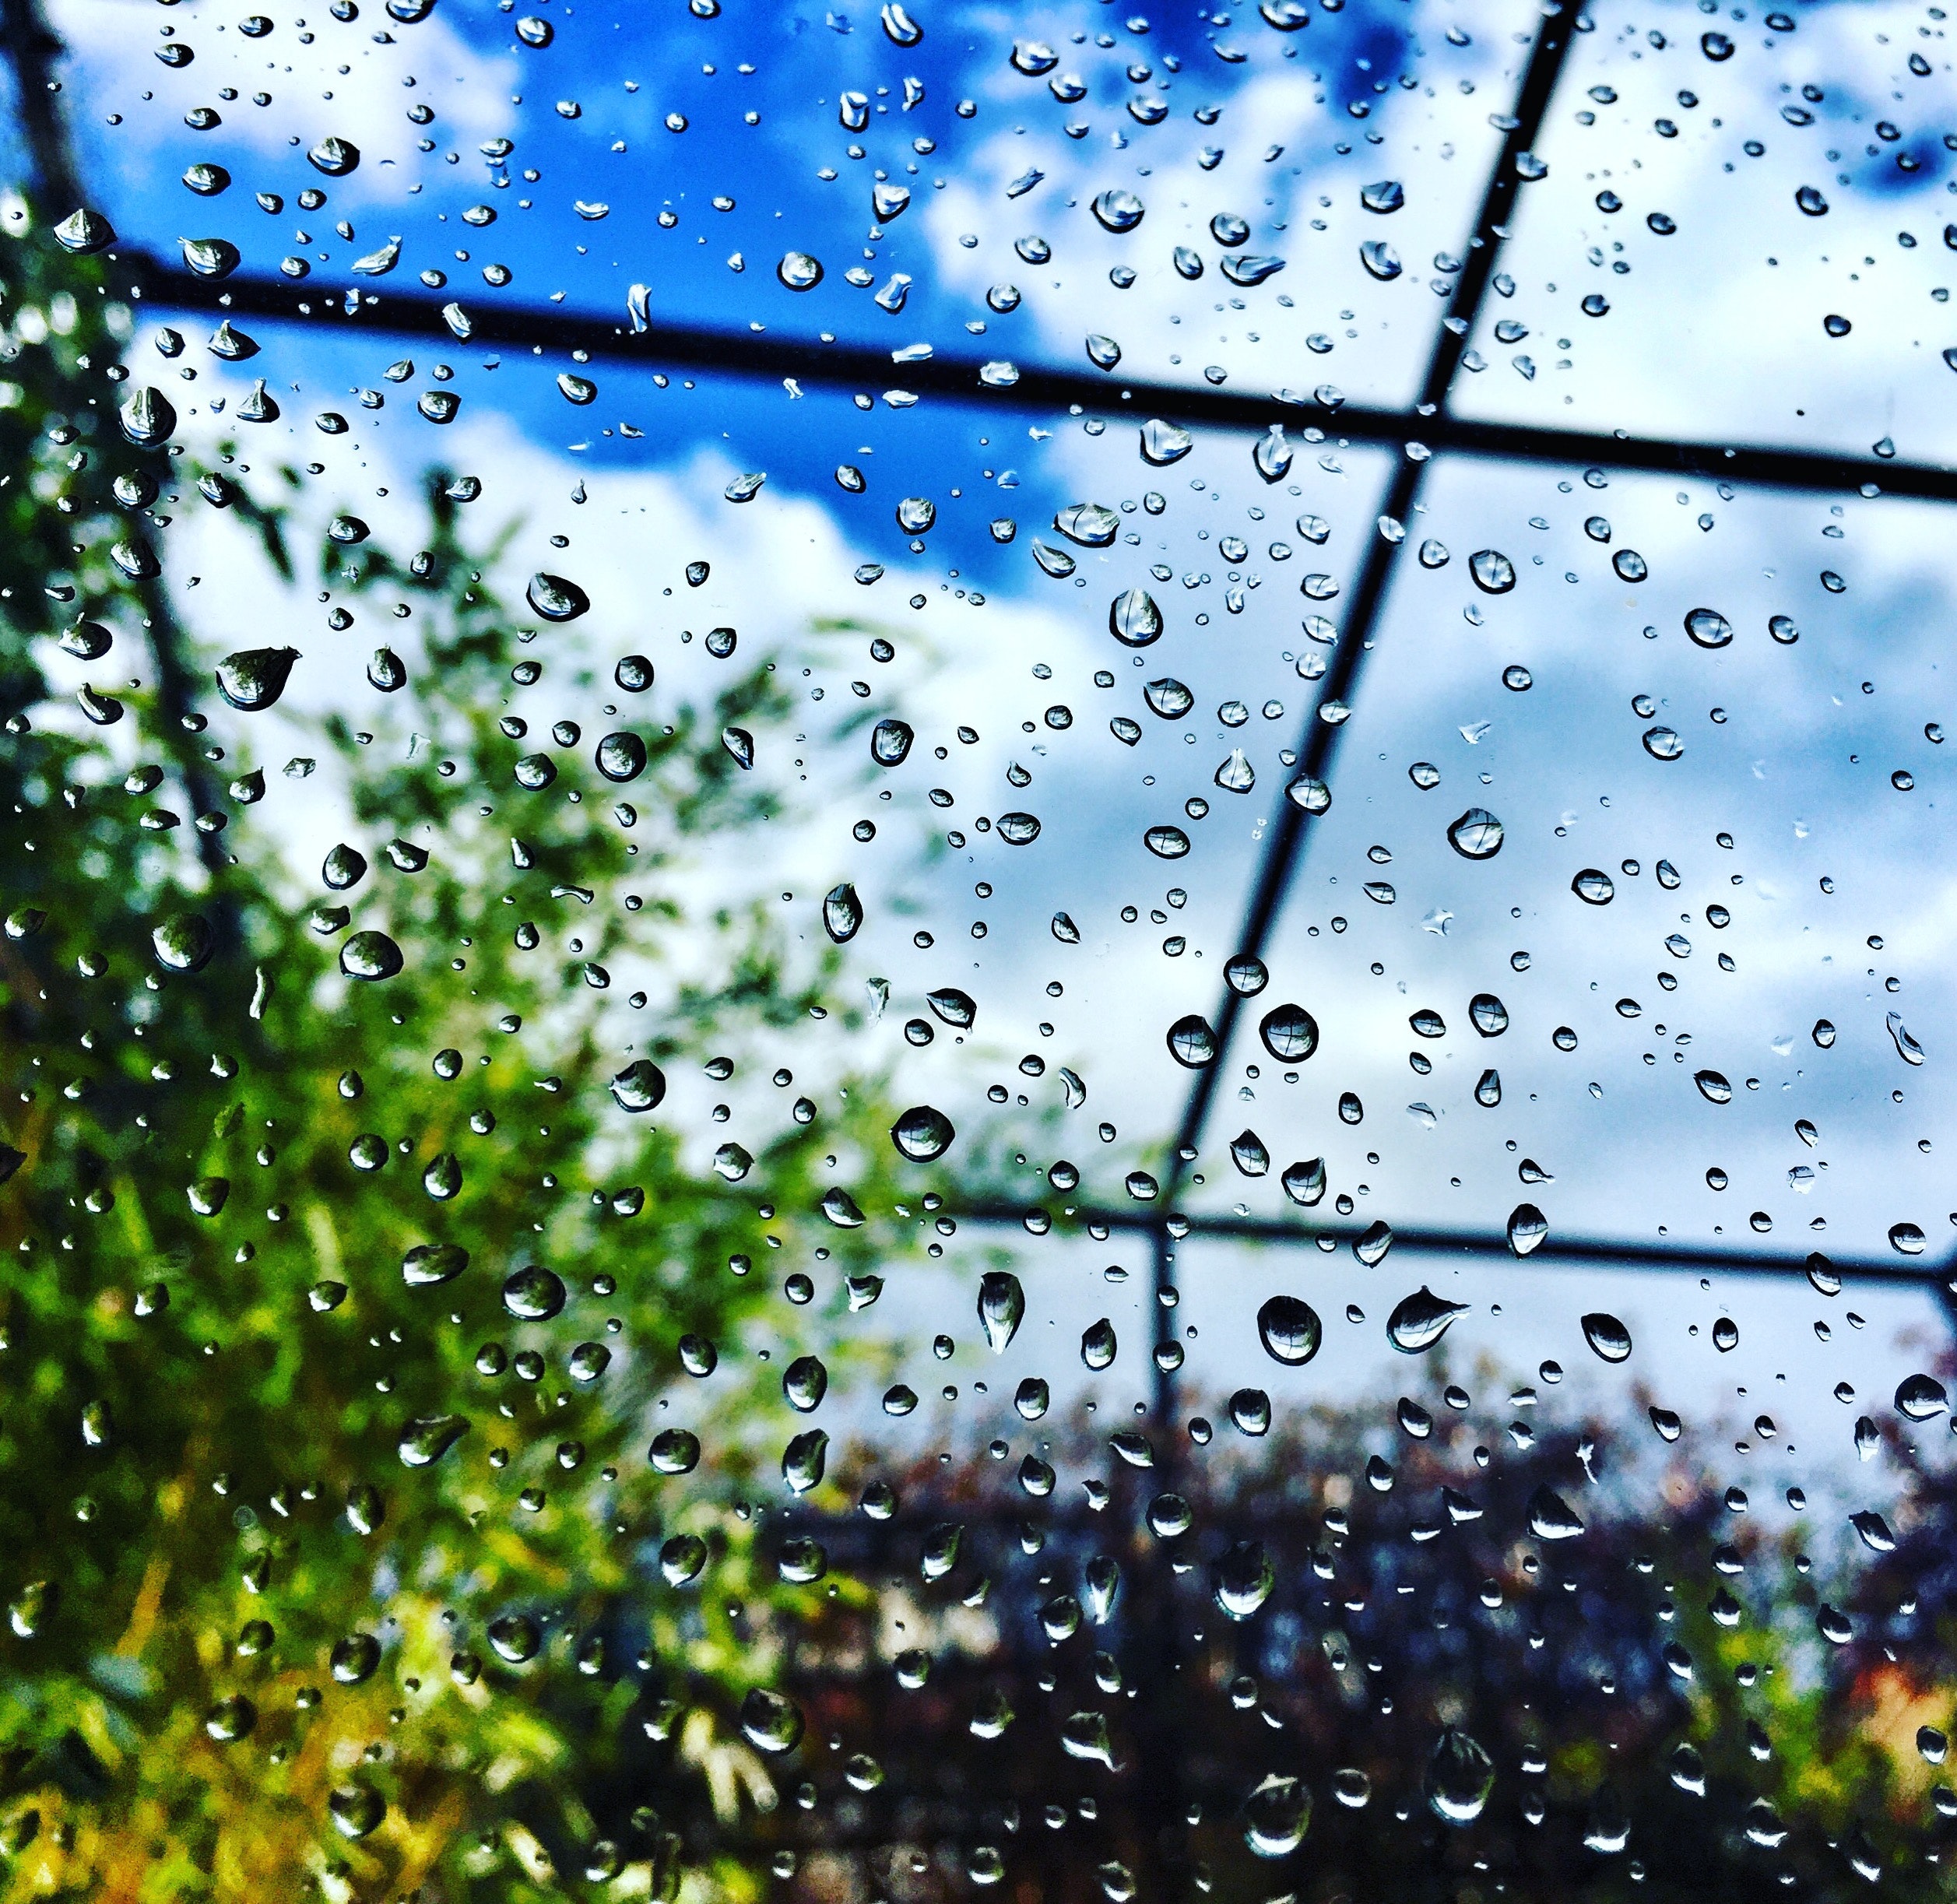 Дождик блок. Капли дождя. Капли на стекле. Дождь на стекле. Обои дождь.